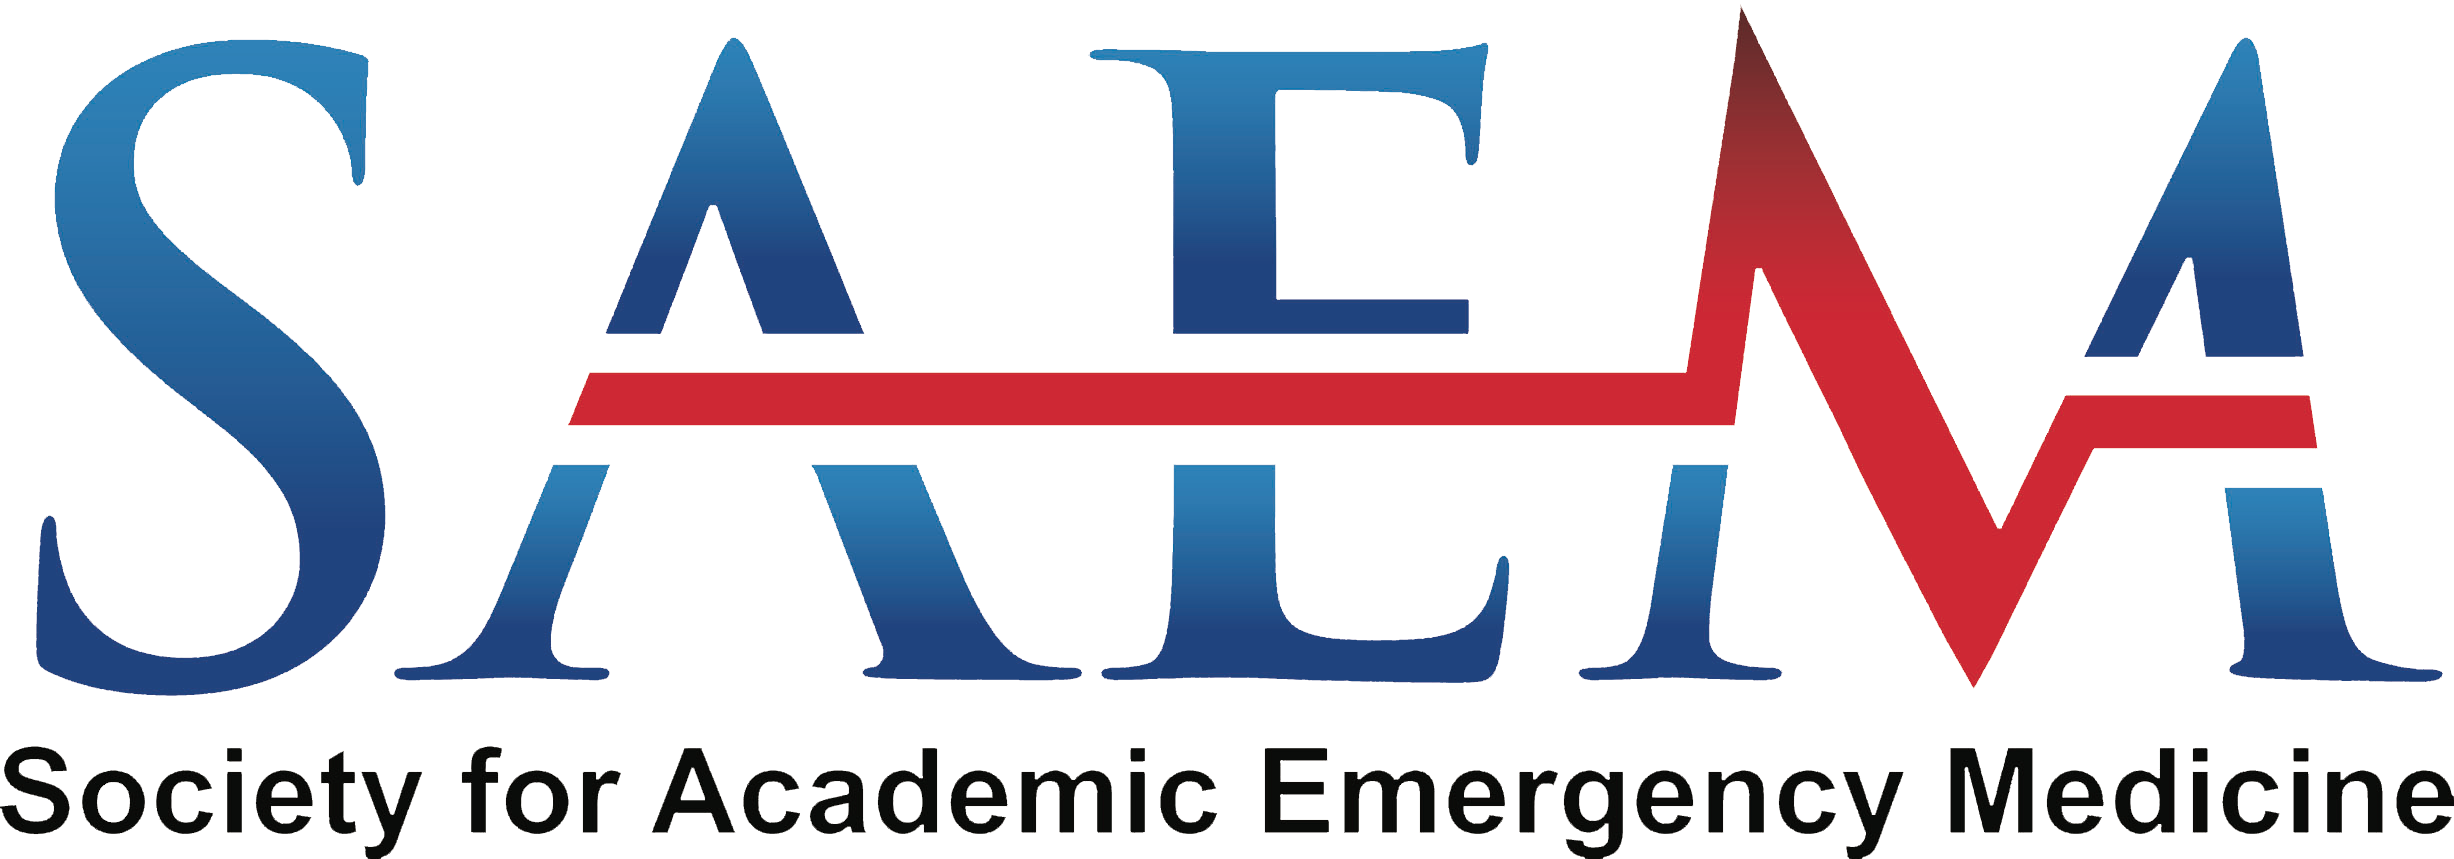 Logo of Society for Academic Emergency Medicine